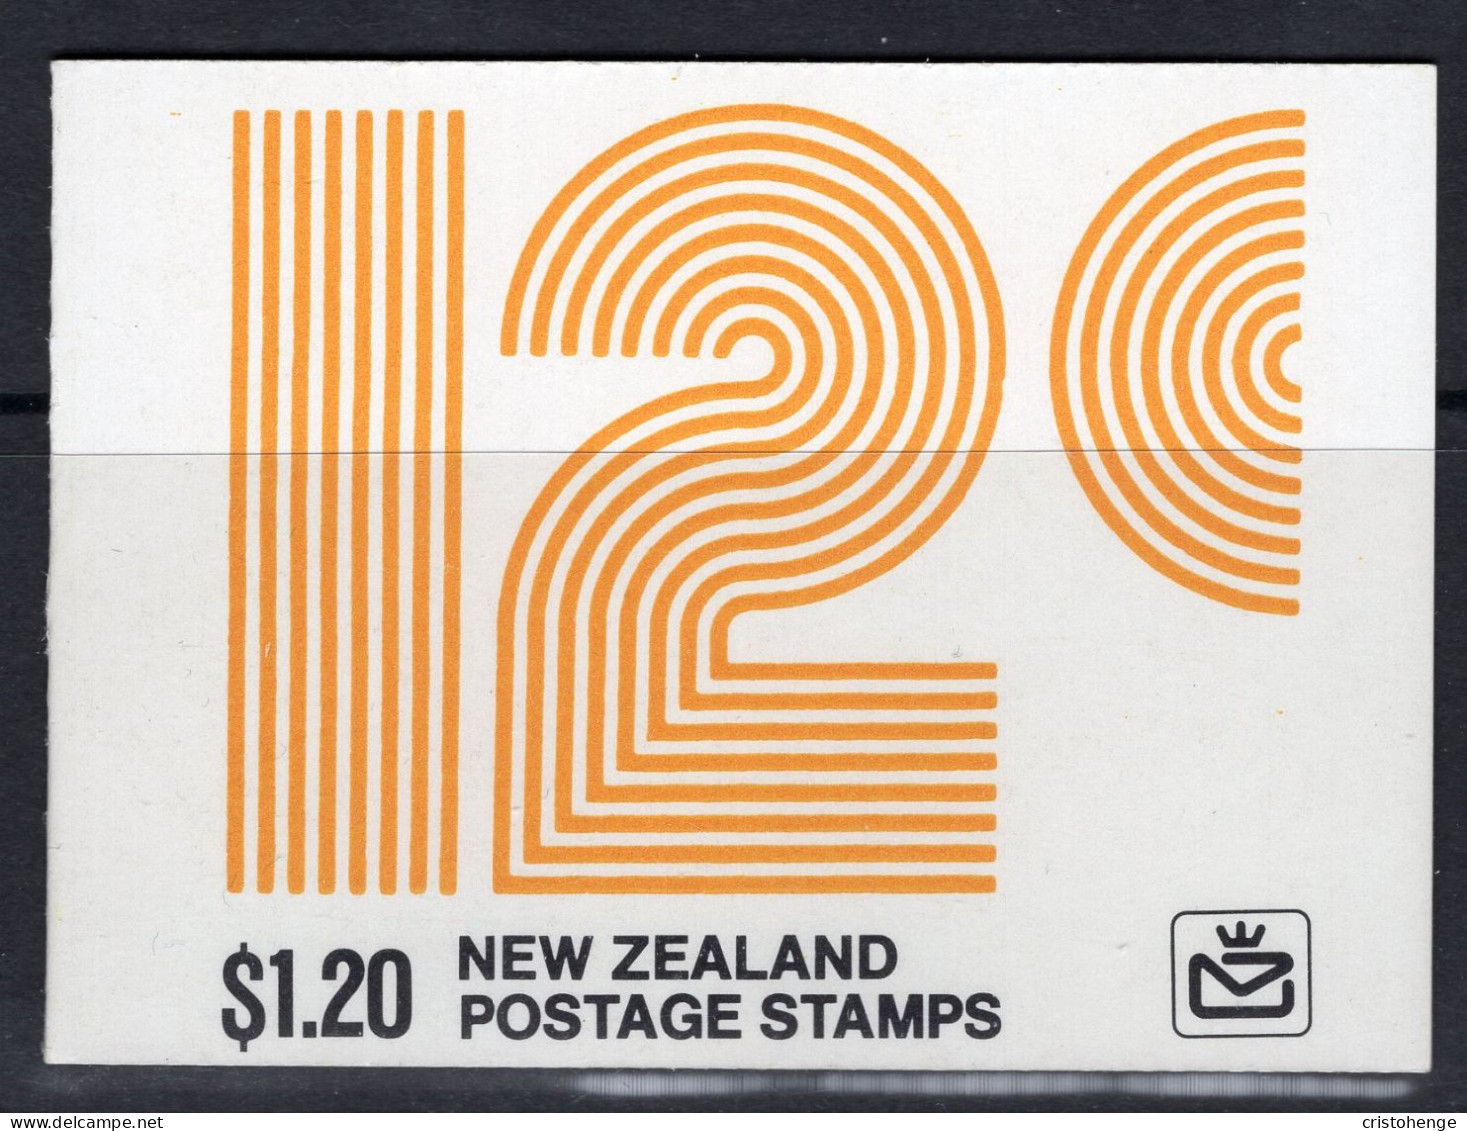 New Zealand 1978-79 Maori Artefacts - $1.20 Booklet Complete (SG SB32) - Officials